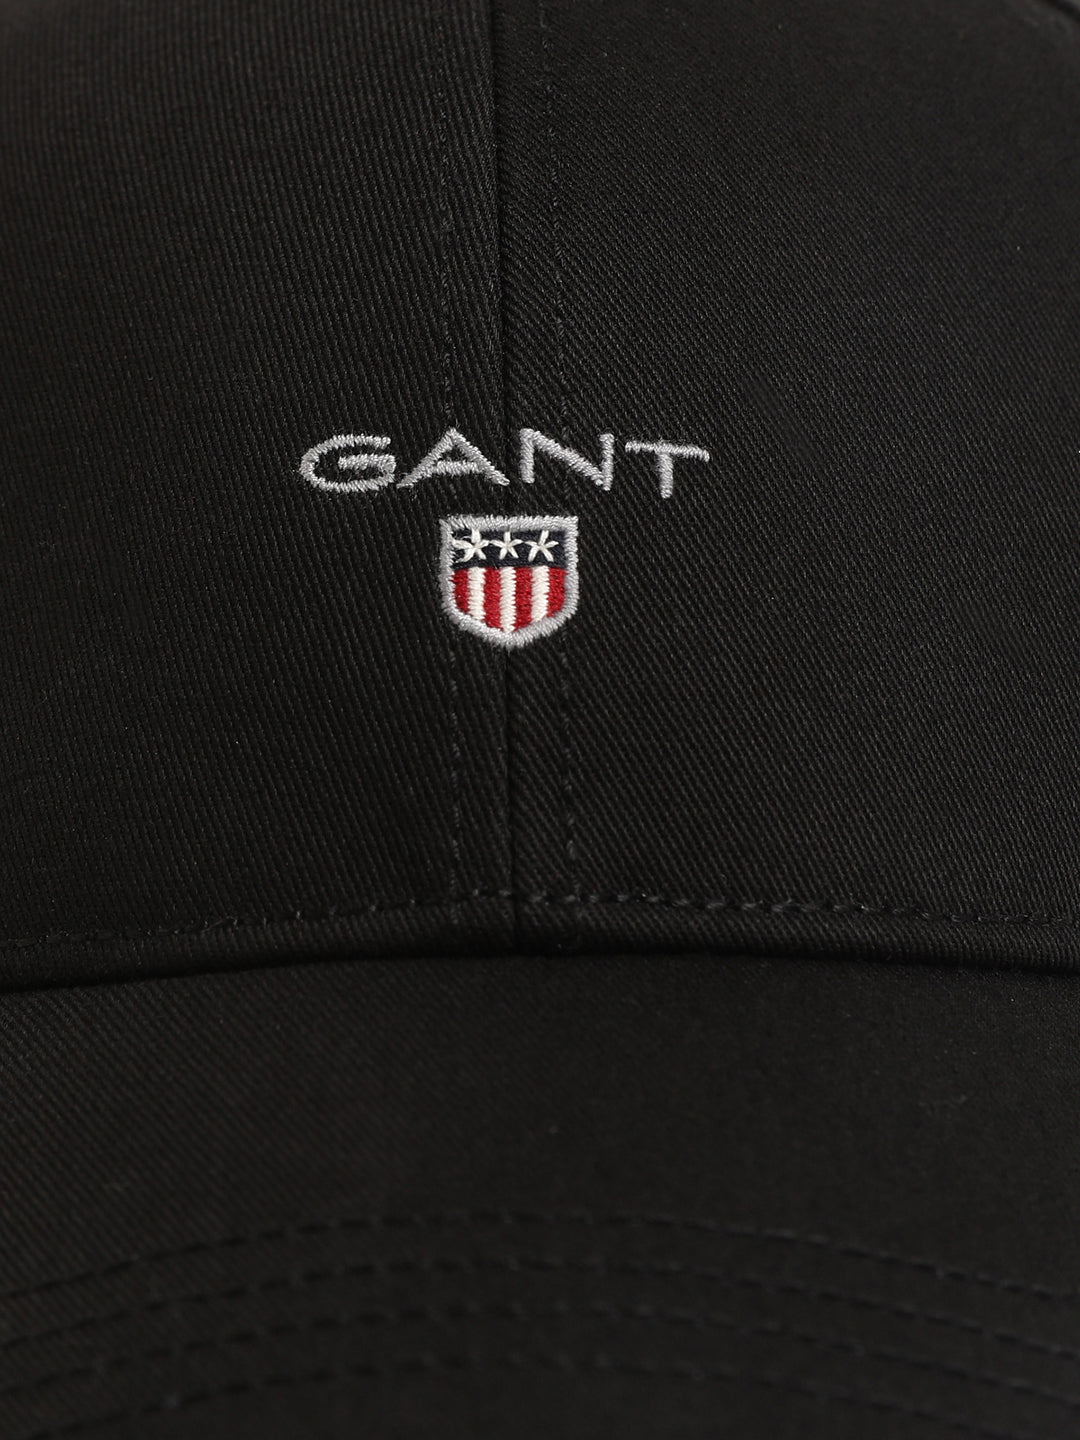 Gant Men Cotton Baseball Cap